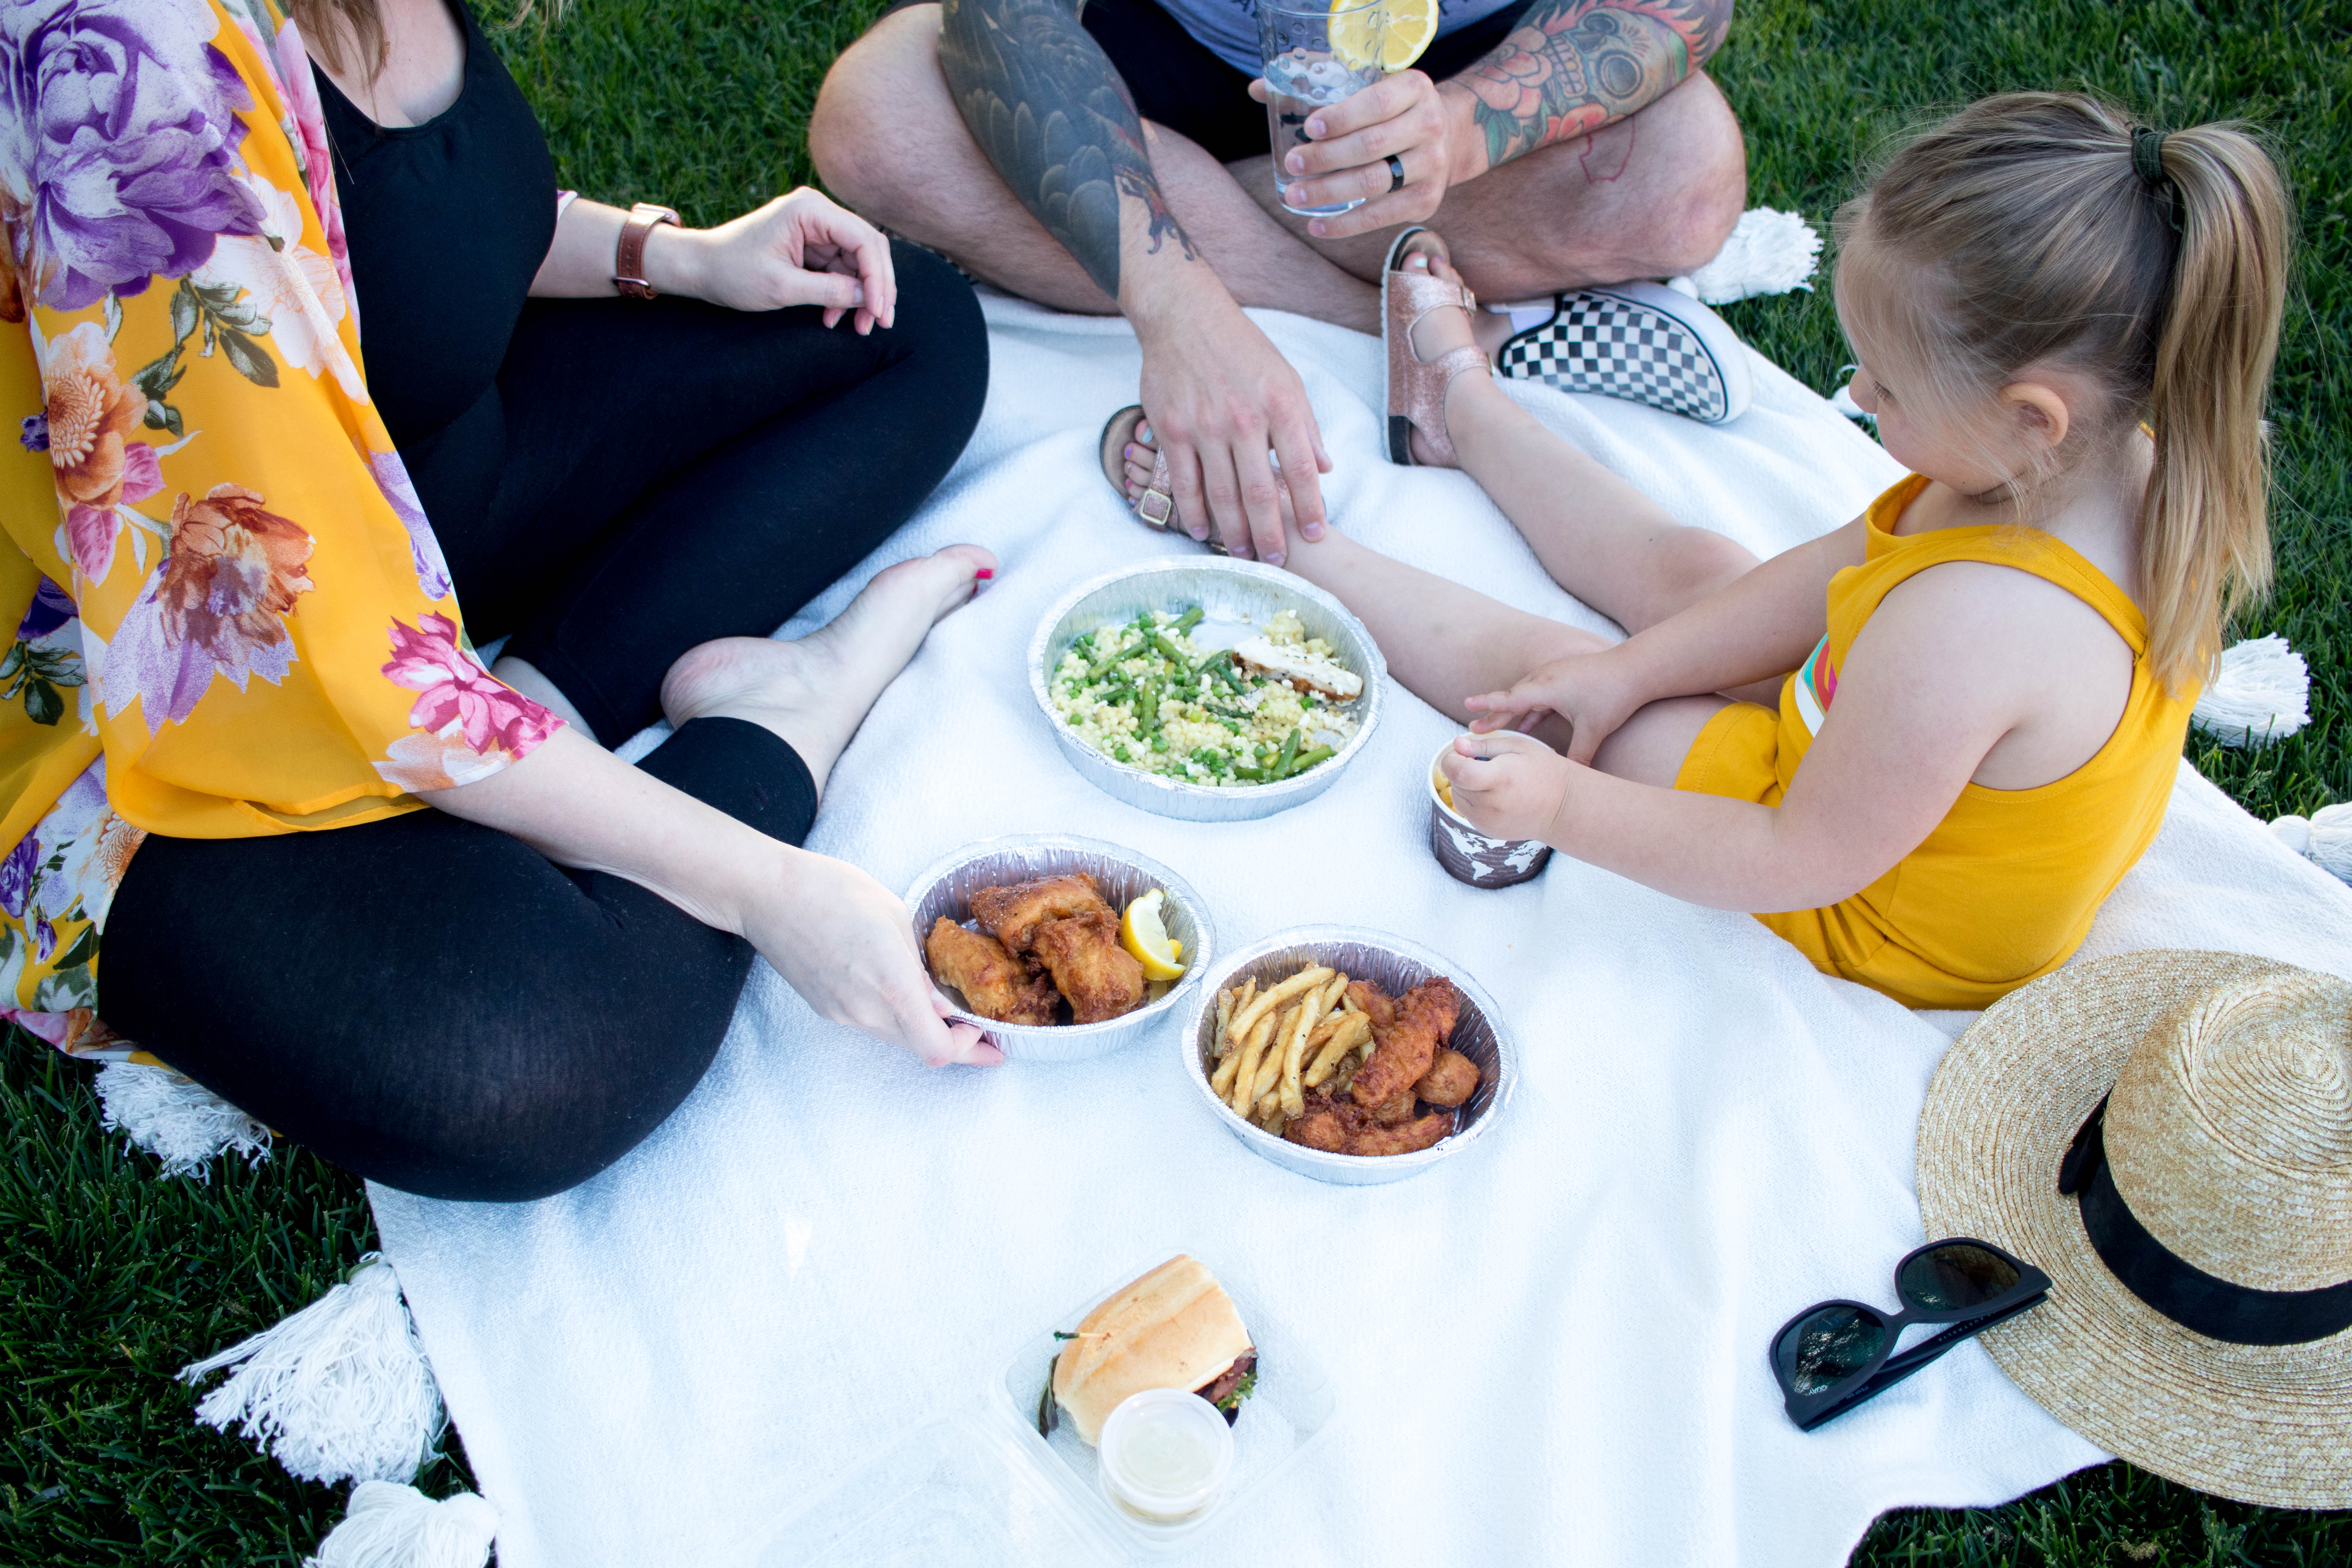 outdoor picnic with Grubhub #grubhub #picnic #familyfun